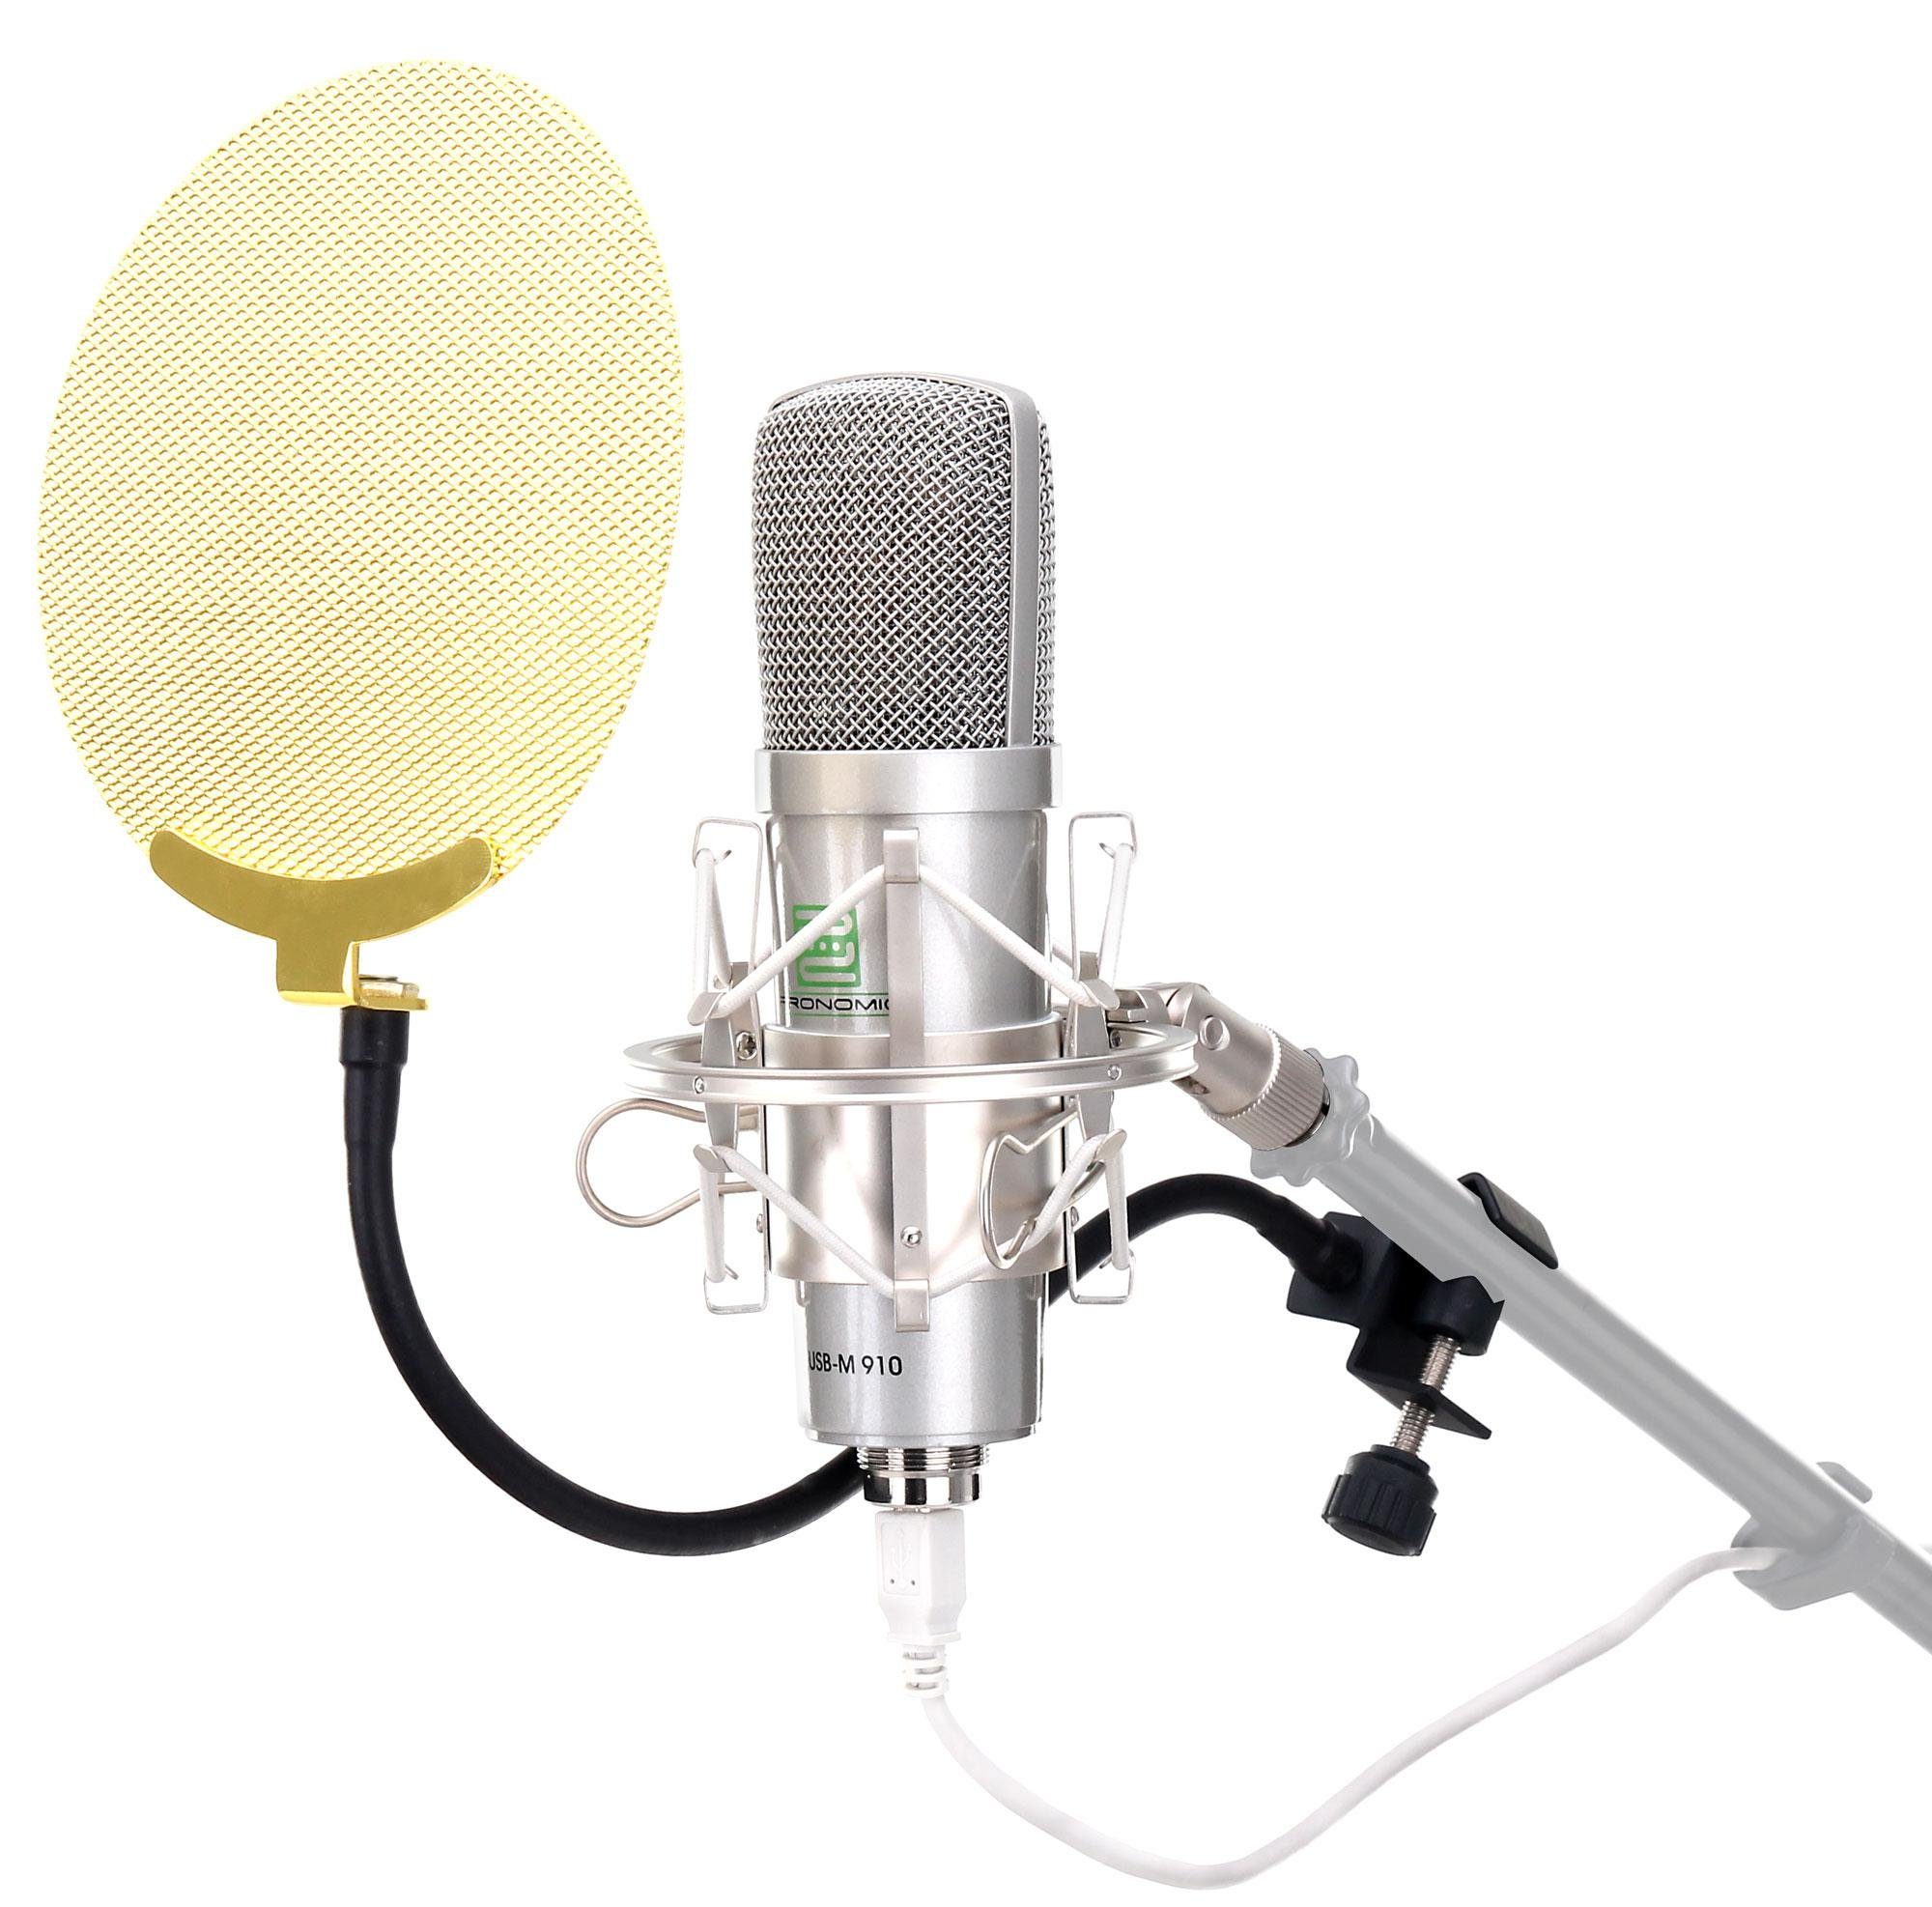 USB-Kabel Recording Mic mit robustem Metallgehäuse Plug & Play Microphone Spinne und Tasche Inkl Pronomic USB-M 910 Podcast Kondensator Mikrofon für Studio-Aufnahmen 